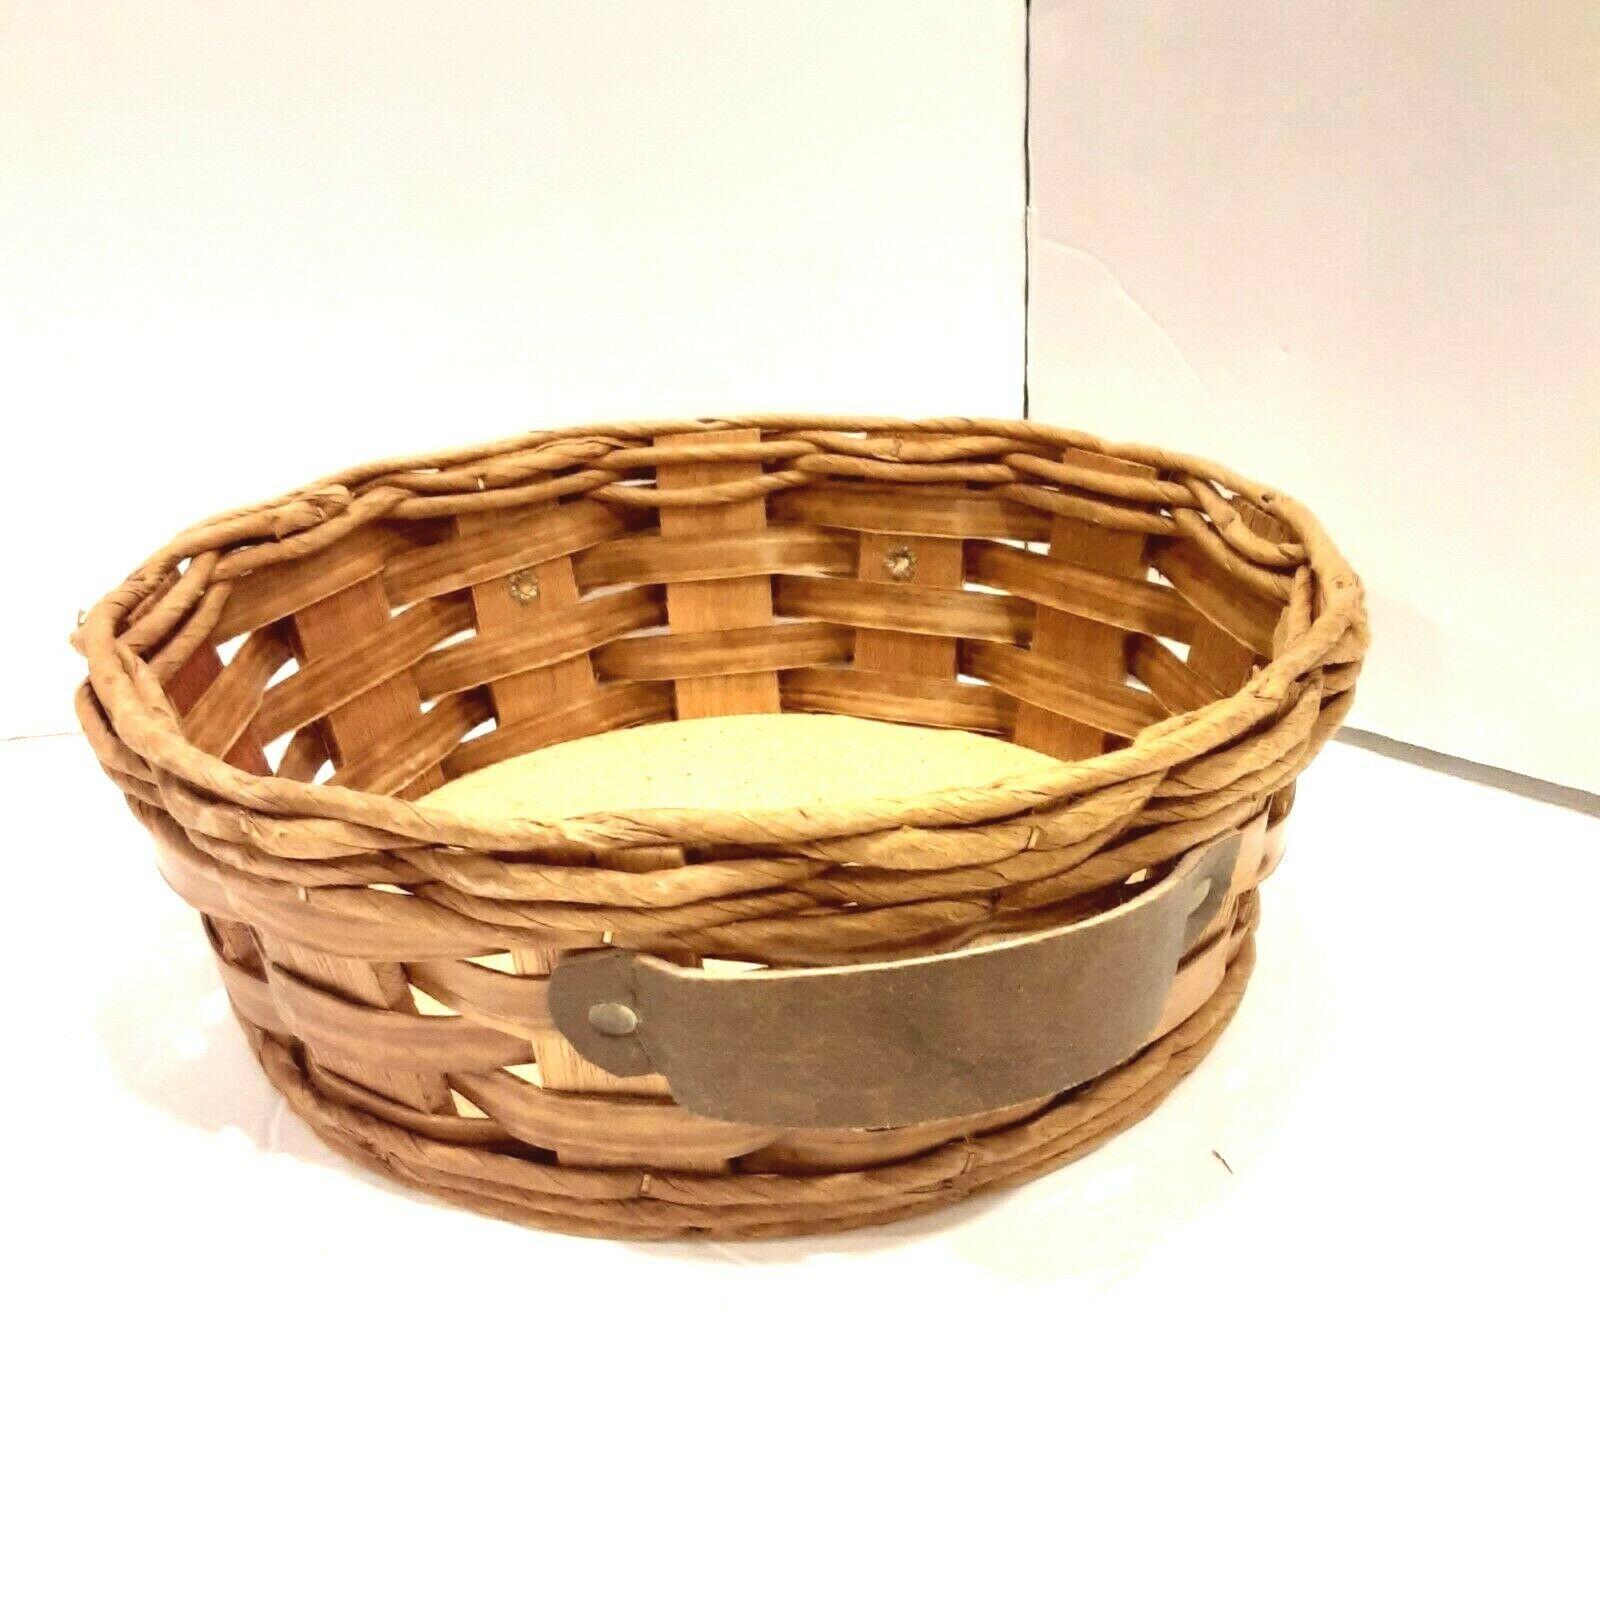 Pyrex Corning Woven Wicker Cork Casserole Holder Basket With Handles Vintage